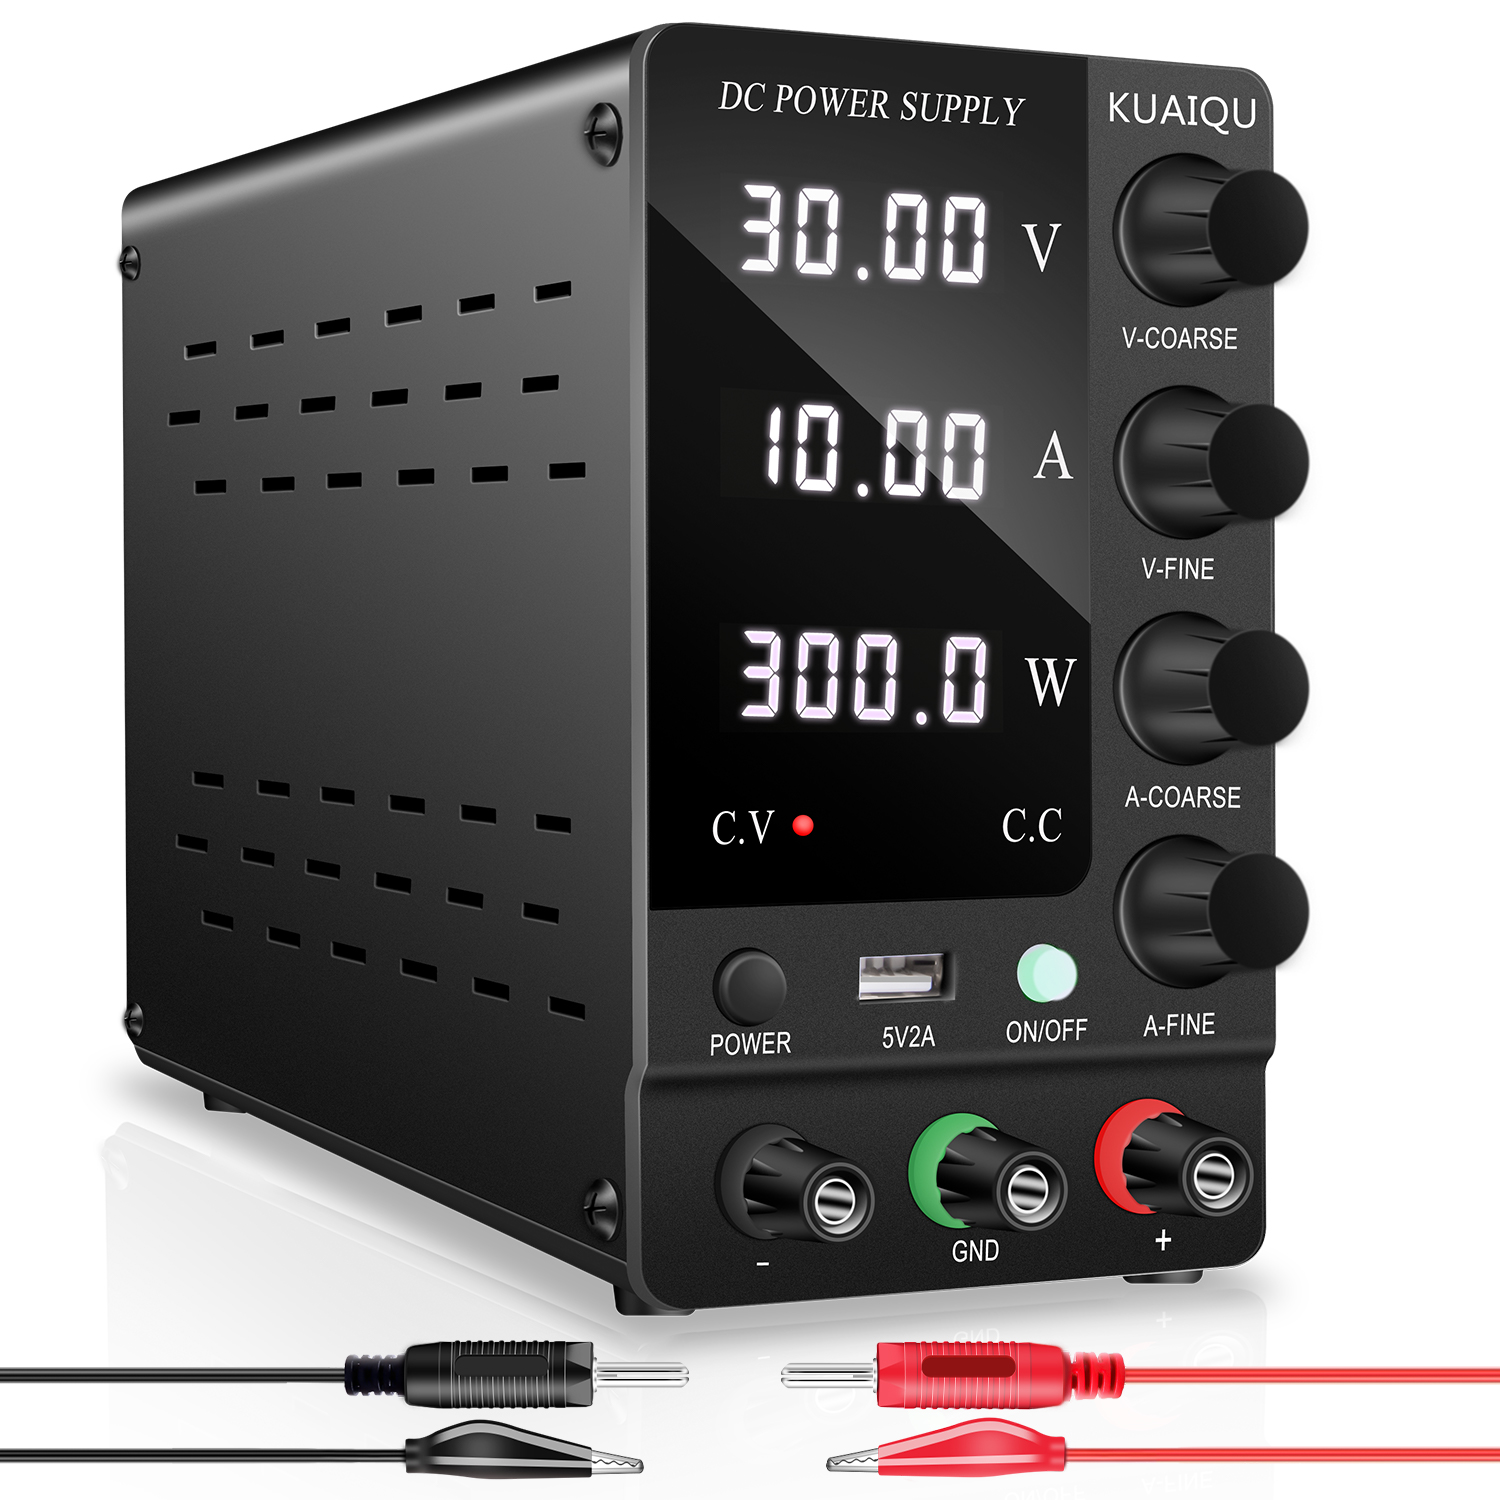 KUAIQU-SPS-C3010-USB-Adjustable-DC-Power-Supply-30V-10A-Laboratory-Lab-Bench-Source-Digital-Voltage--1871078-1